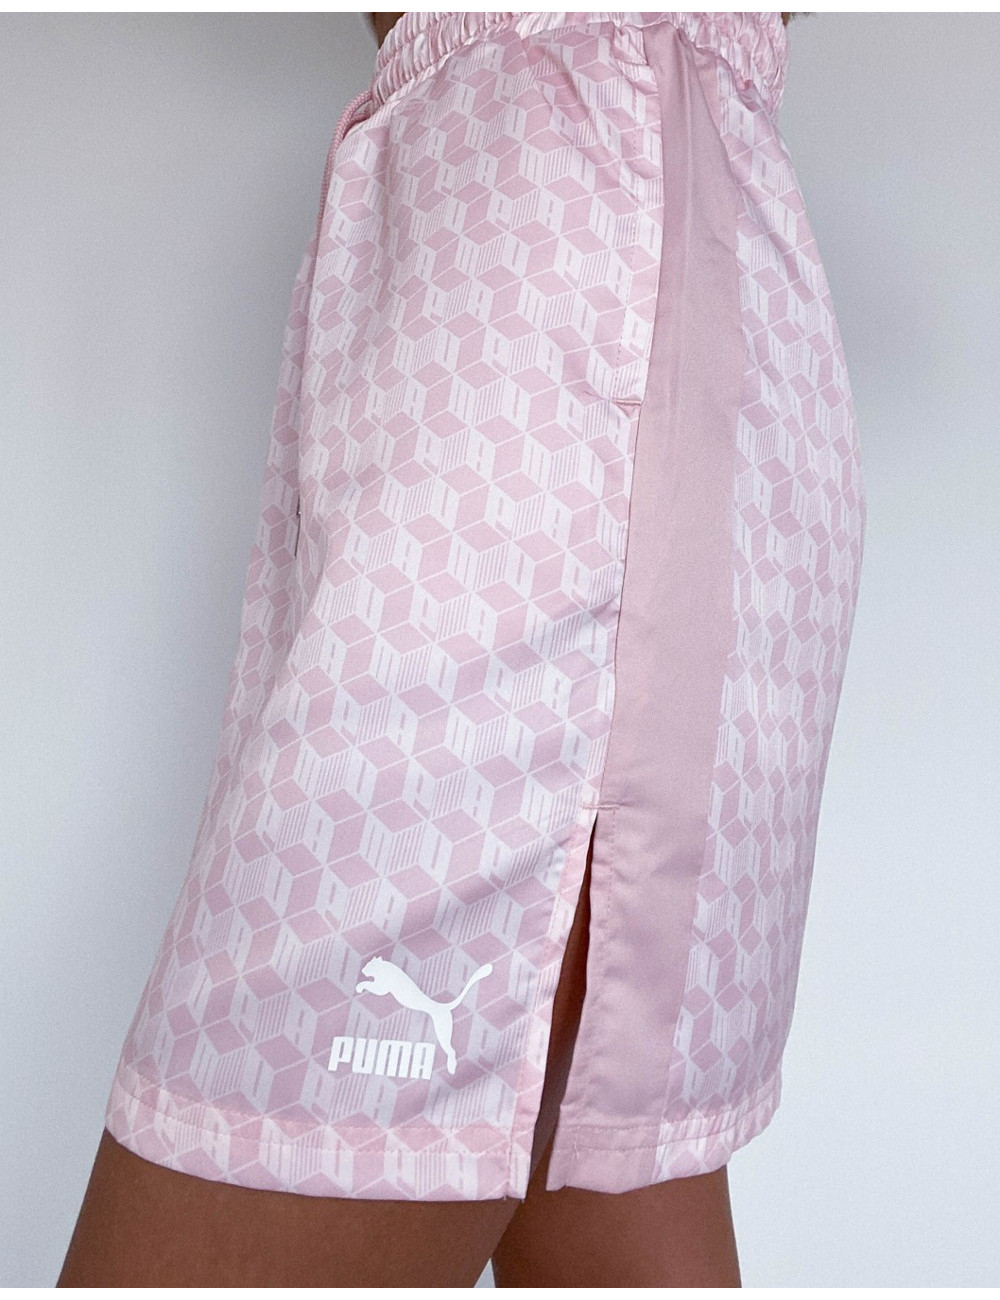 Puma satin skirt in pink...